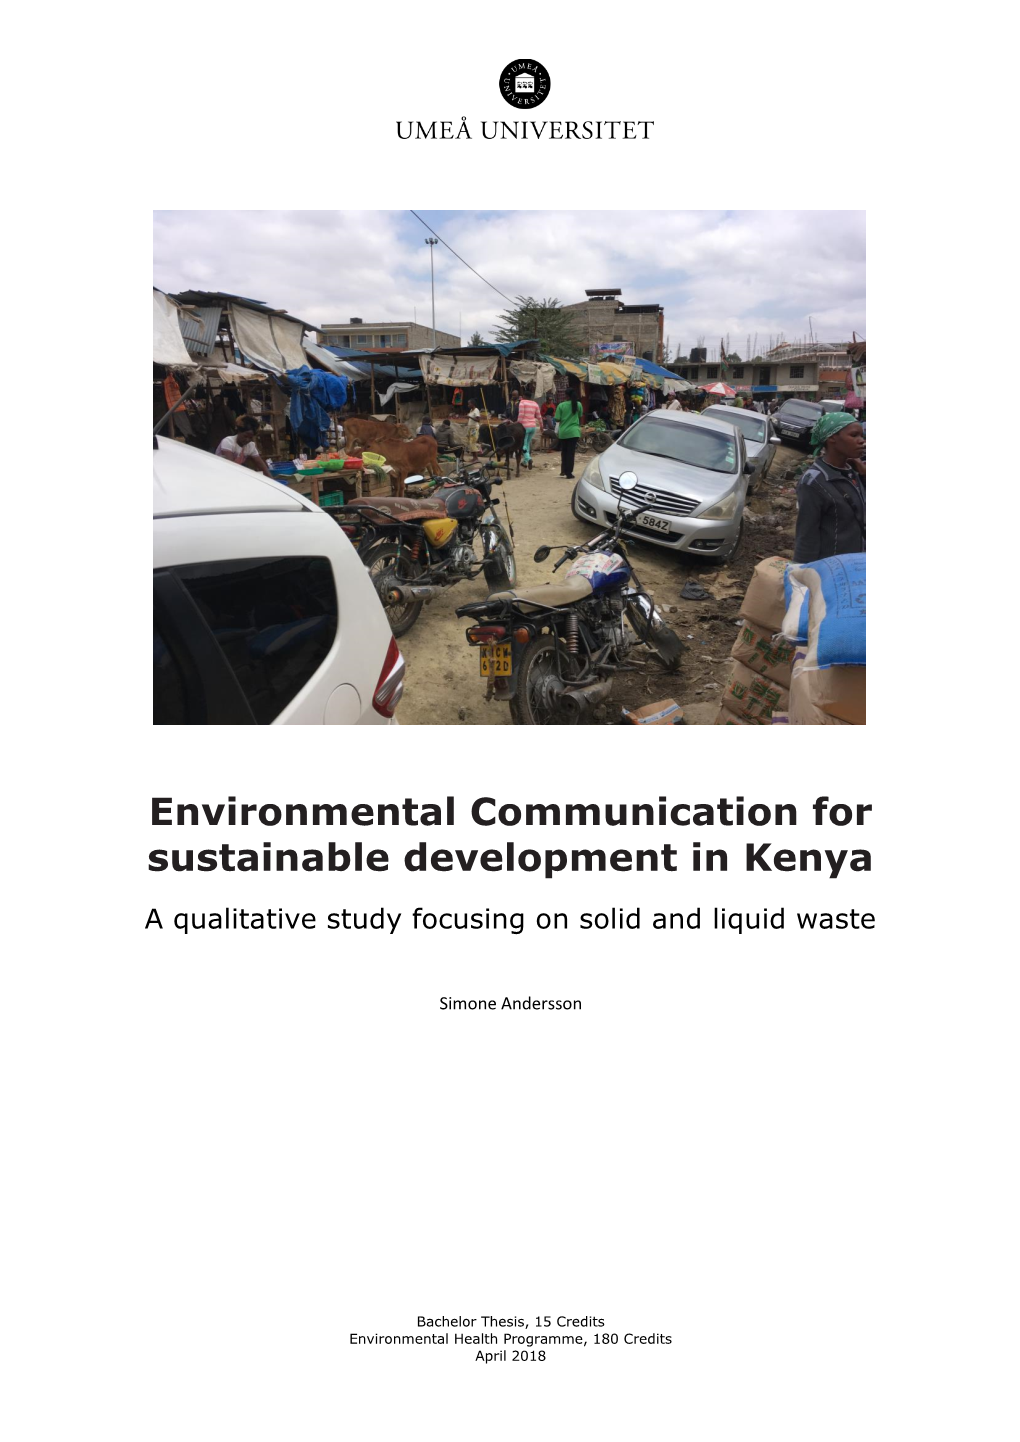 Environmental Communication for Sustainable Development in Kenya